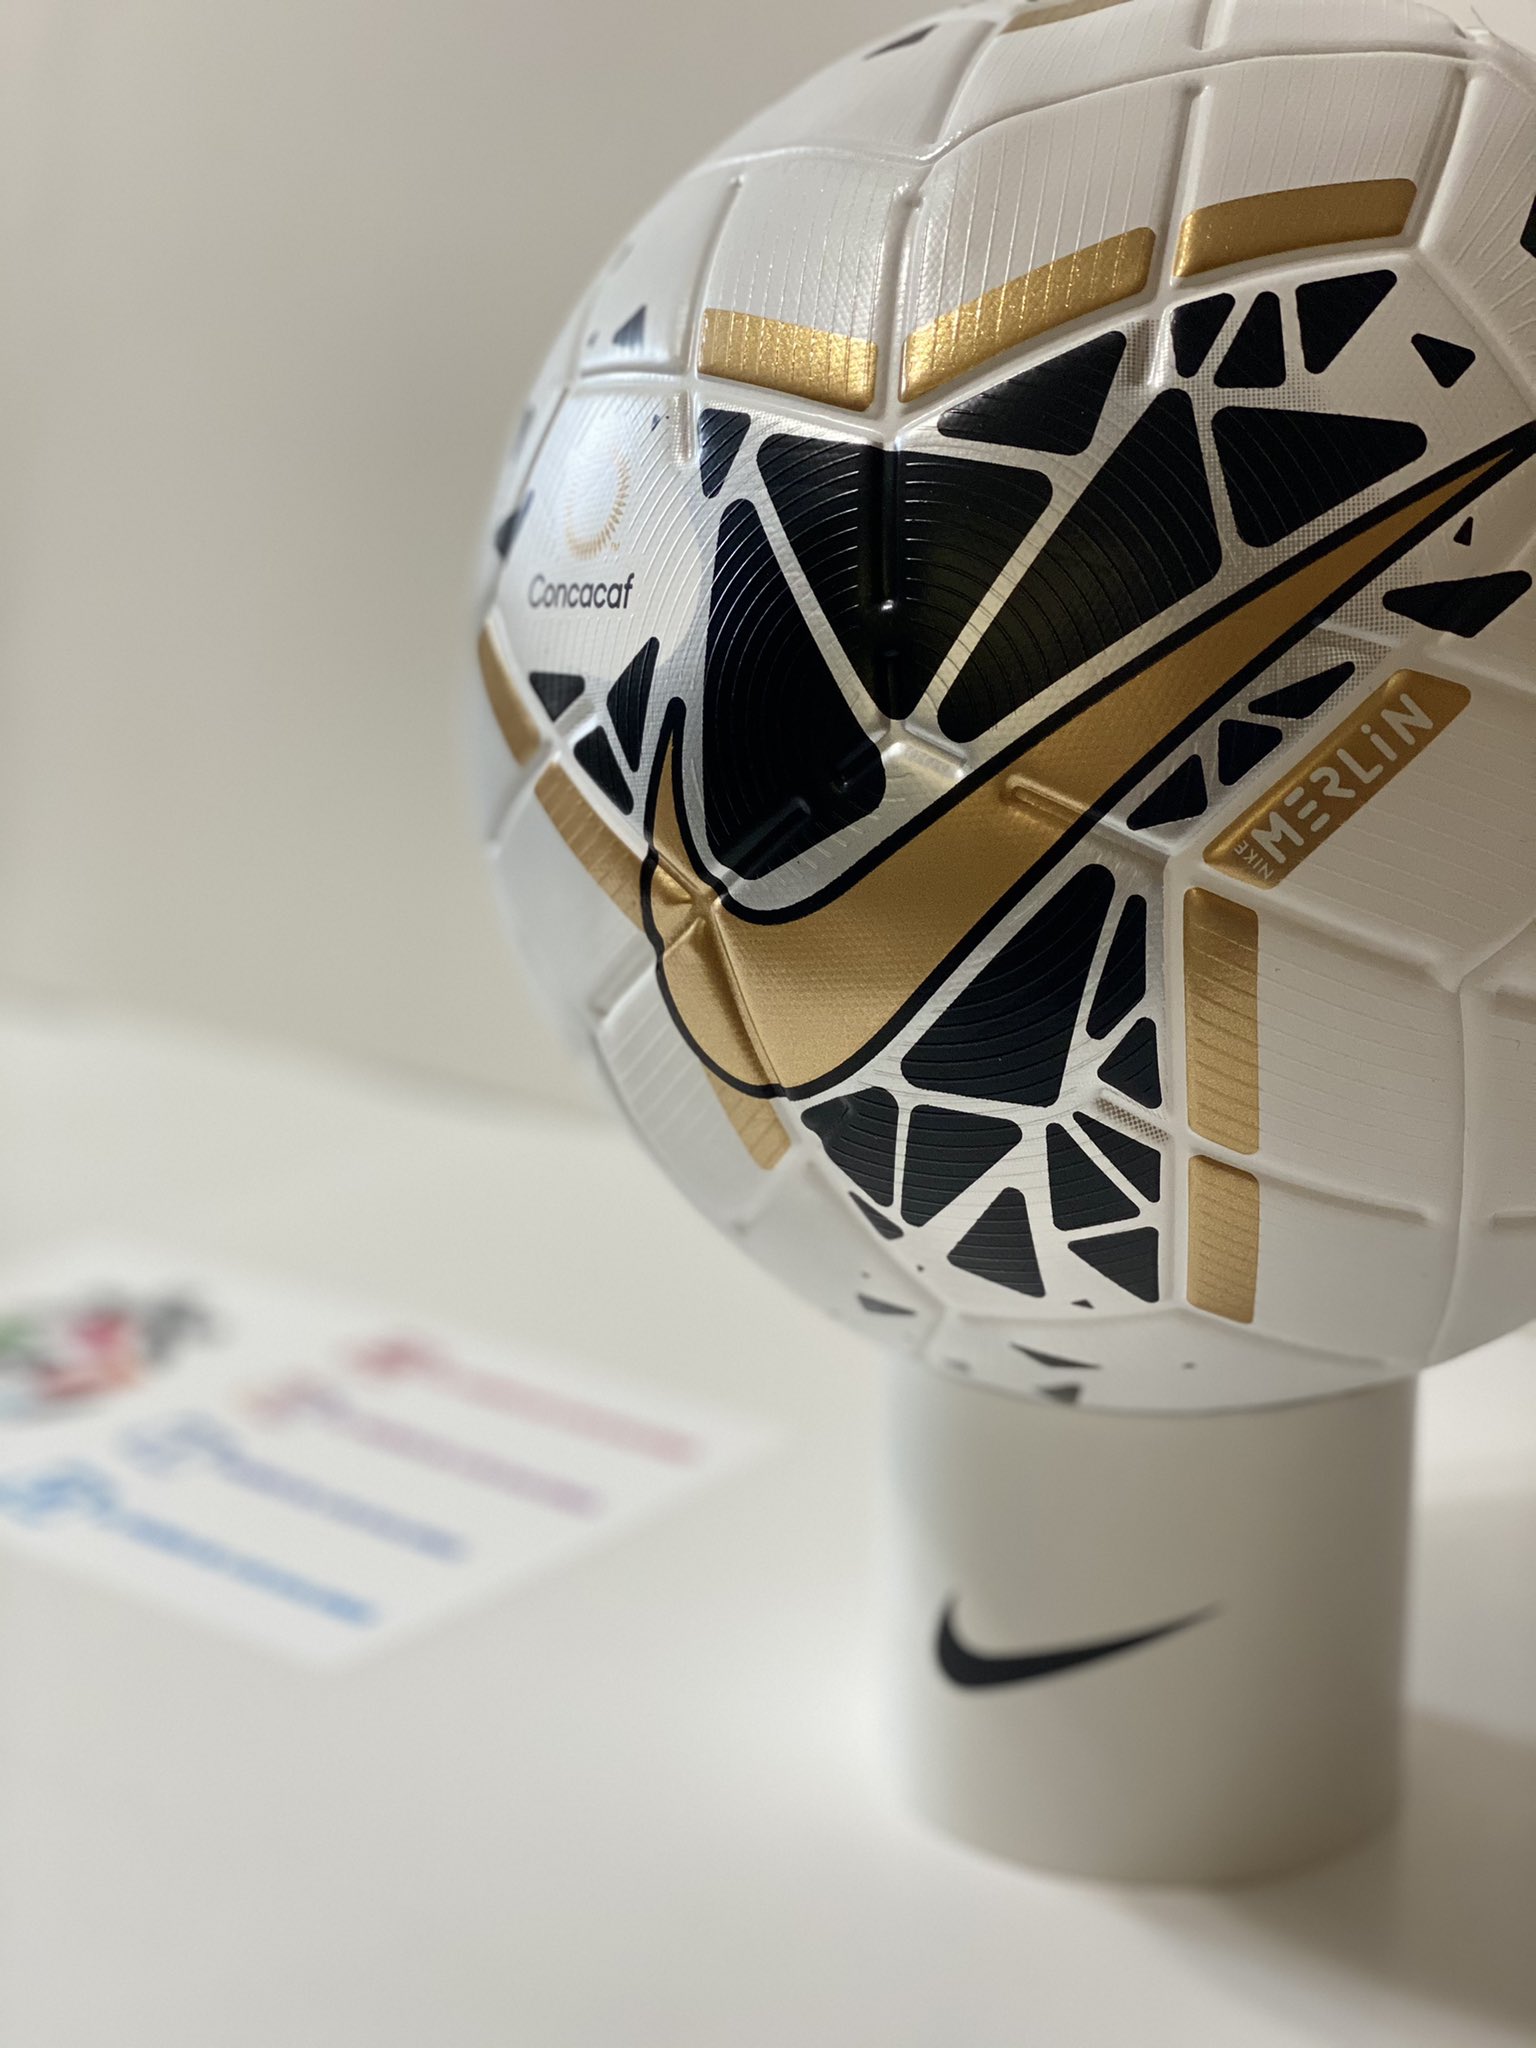 El Mundo De Los Balones on Twitter: "Nike Merlin 2 Concacaf Champions League 2020 #MLS #LigaMX #memoochoa #nikesoccer #nikemerlin #concacafchampionsleague #carlosvela #gignac #Tigres #piojoherrera #lafc https://t.co/7iiTZLK5XB https://t.co ...